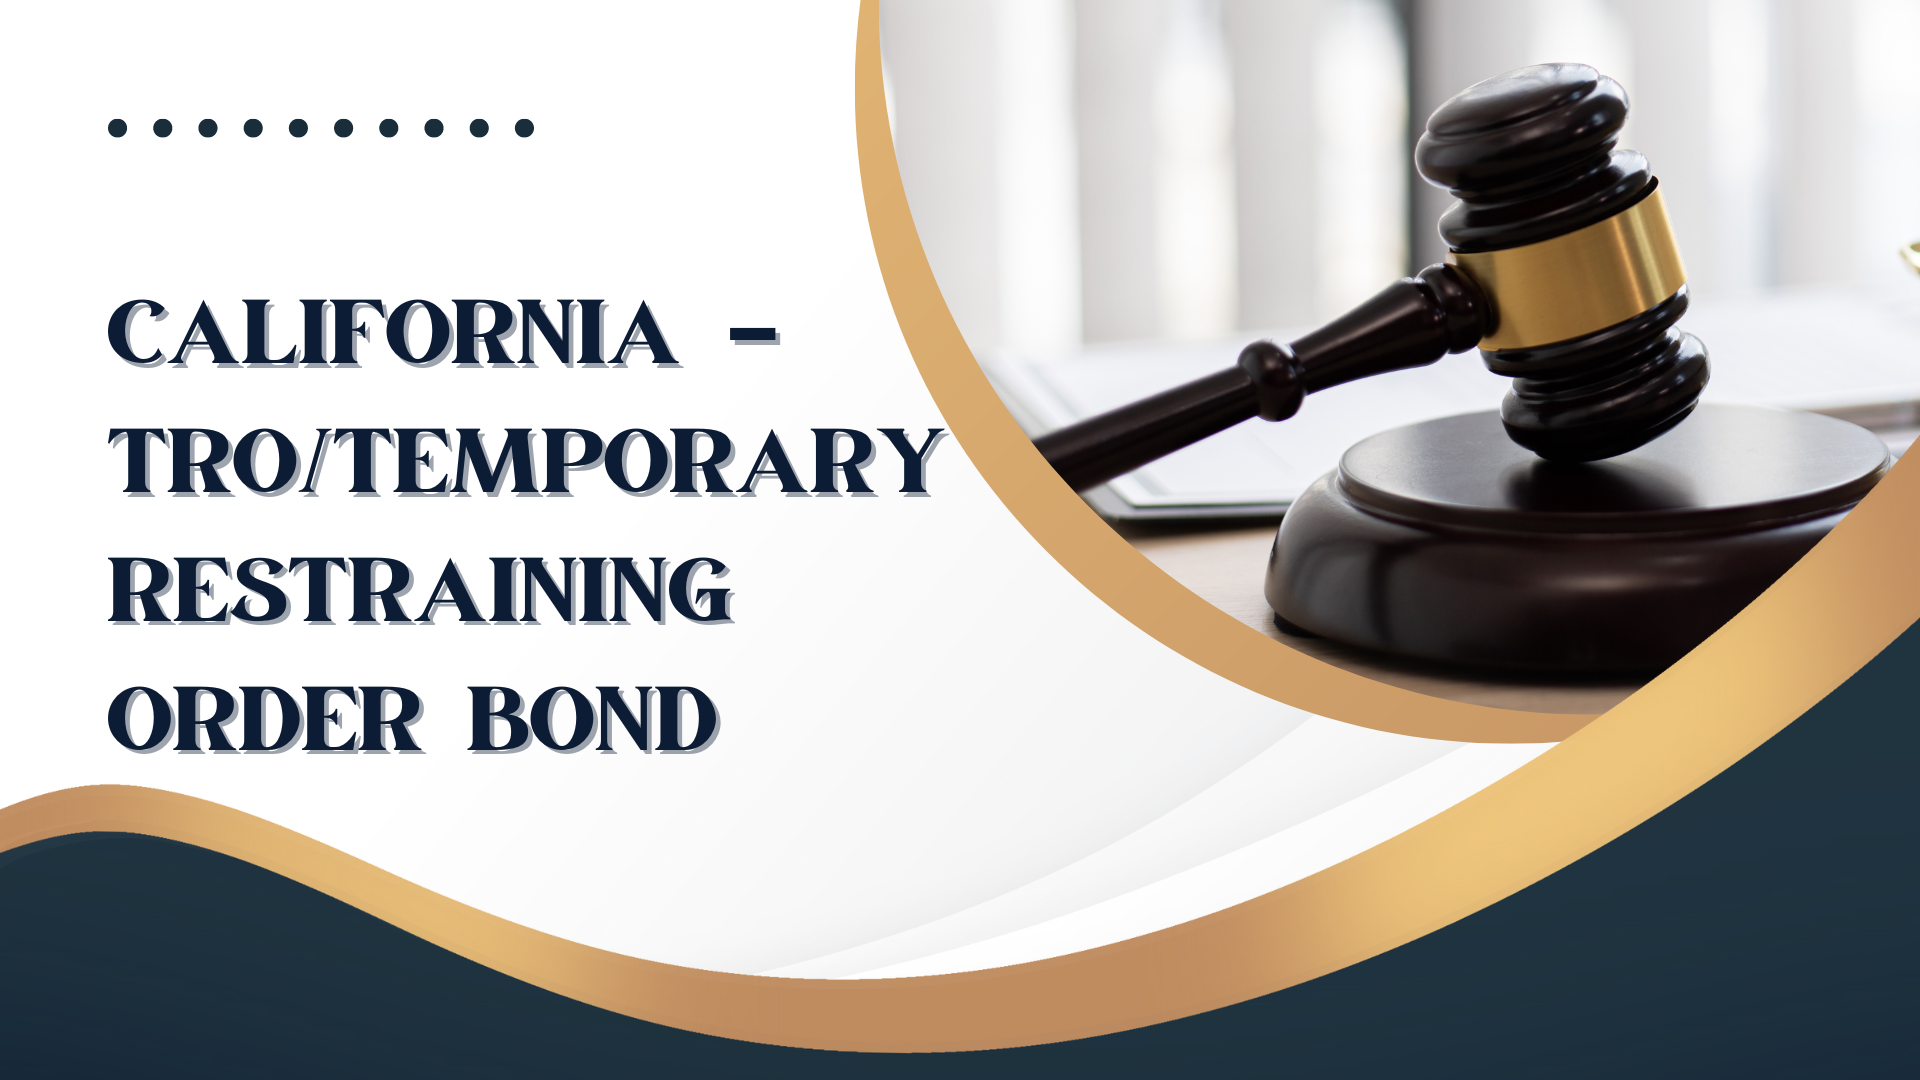 Surety Bond-California – TRO/Temporary Restraining Order Bond